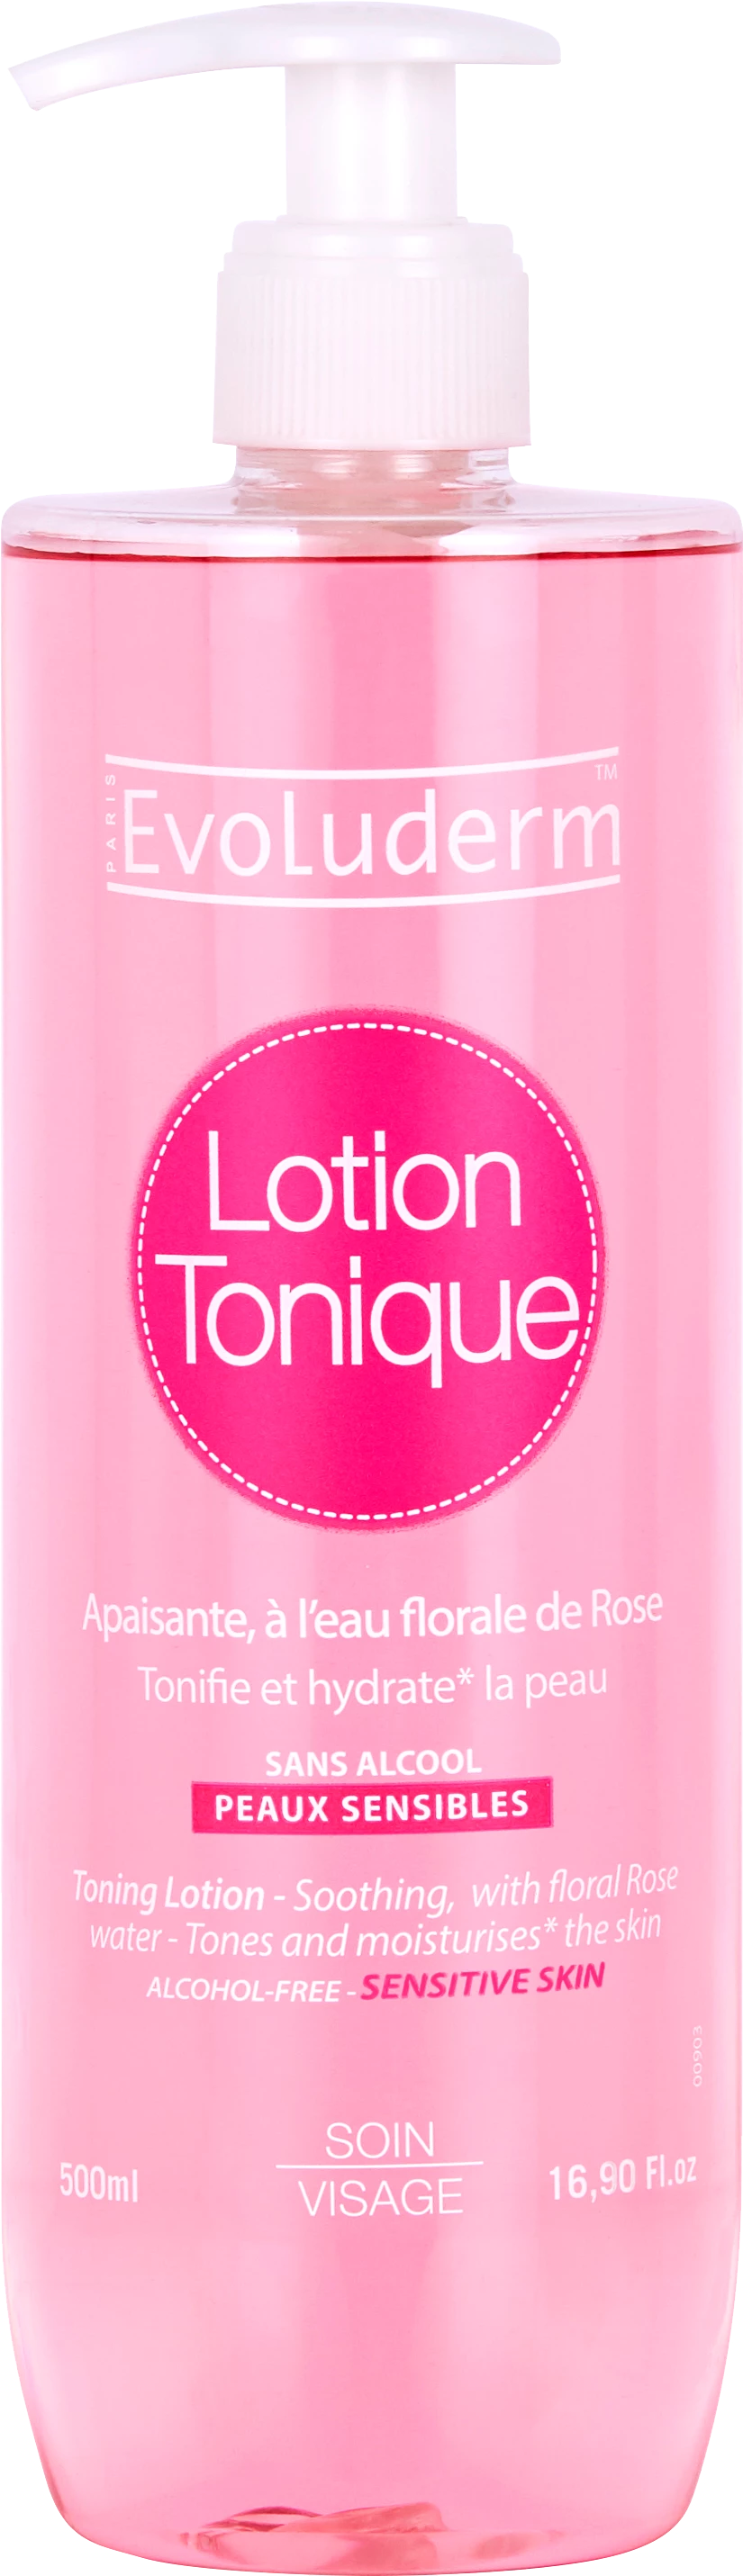 Tonic Lotion for Sensitive Skin, 500ml - EVOLUDERM